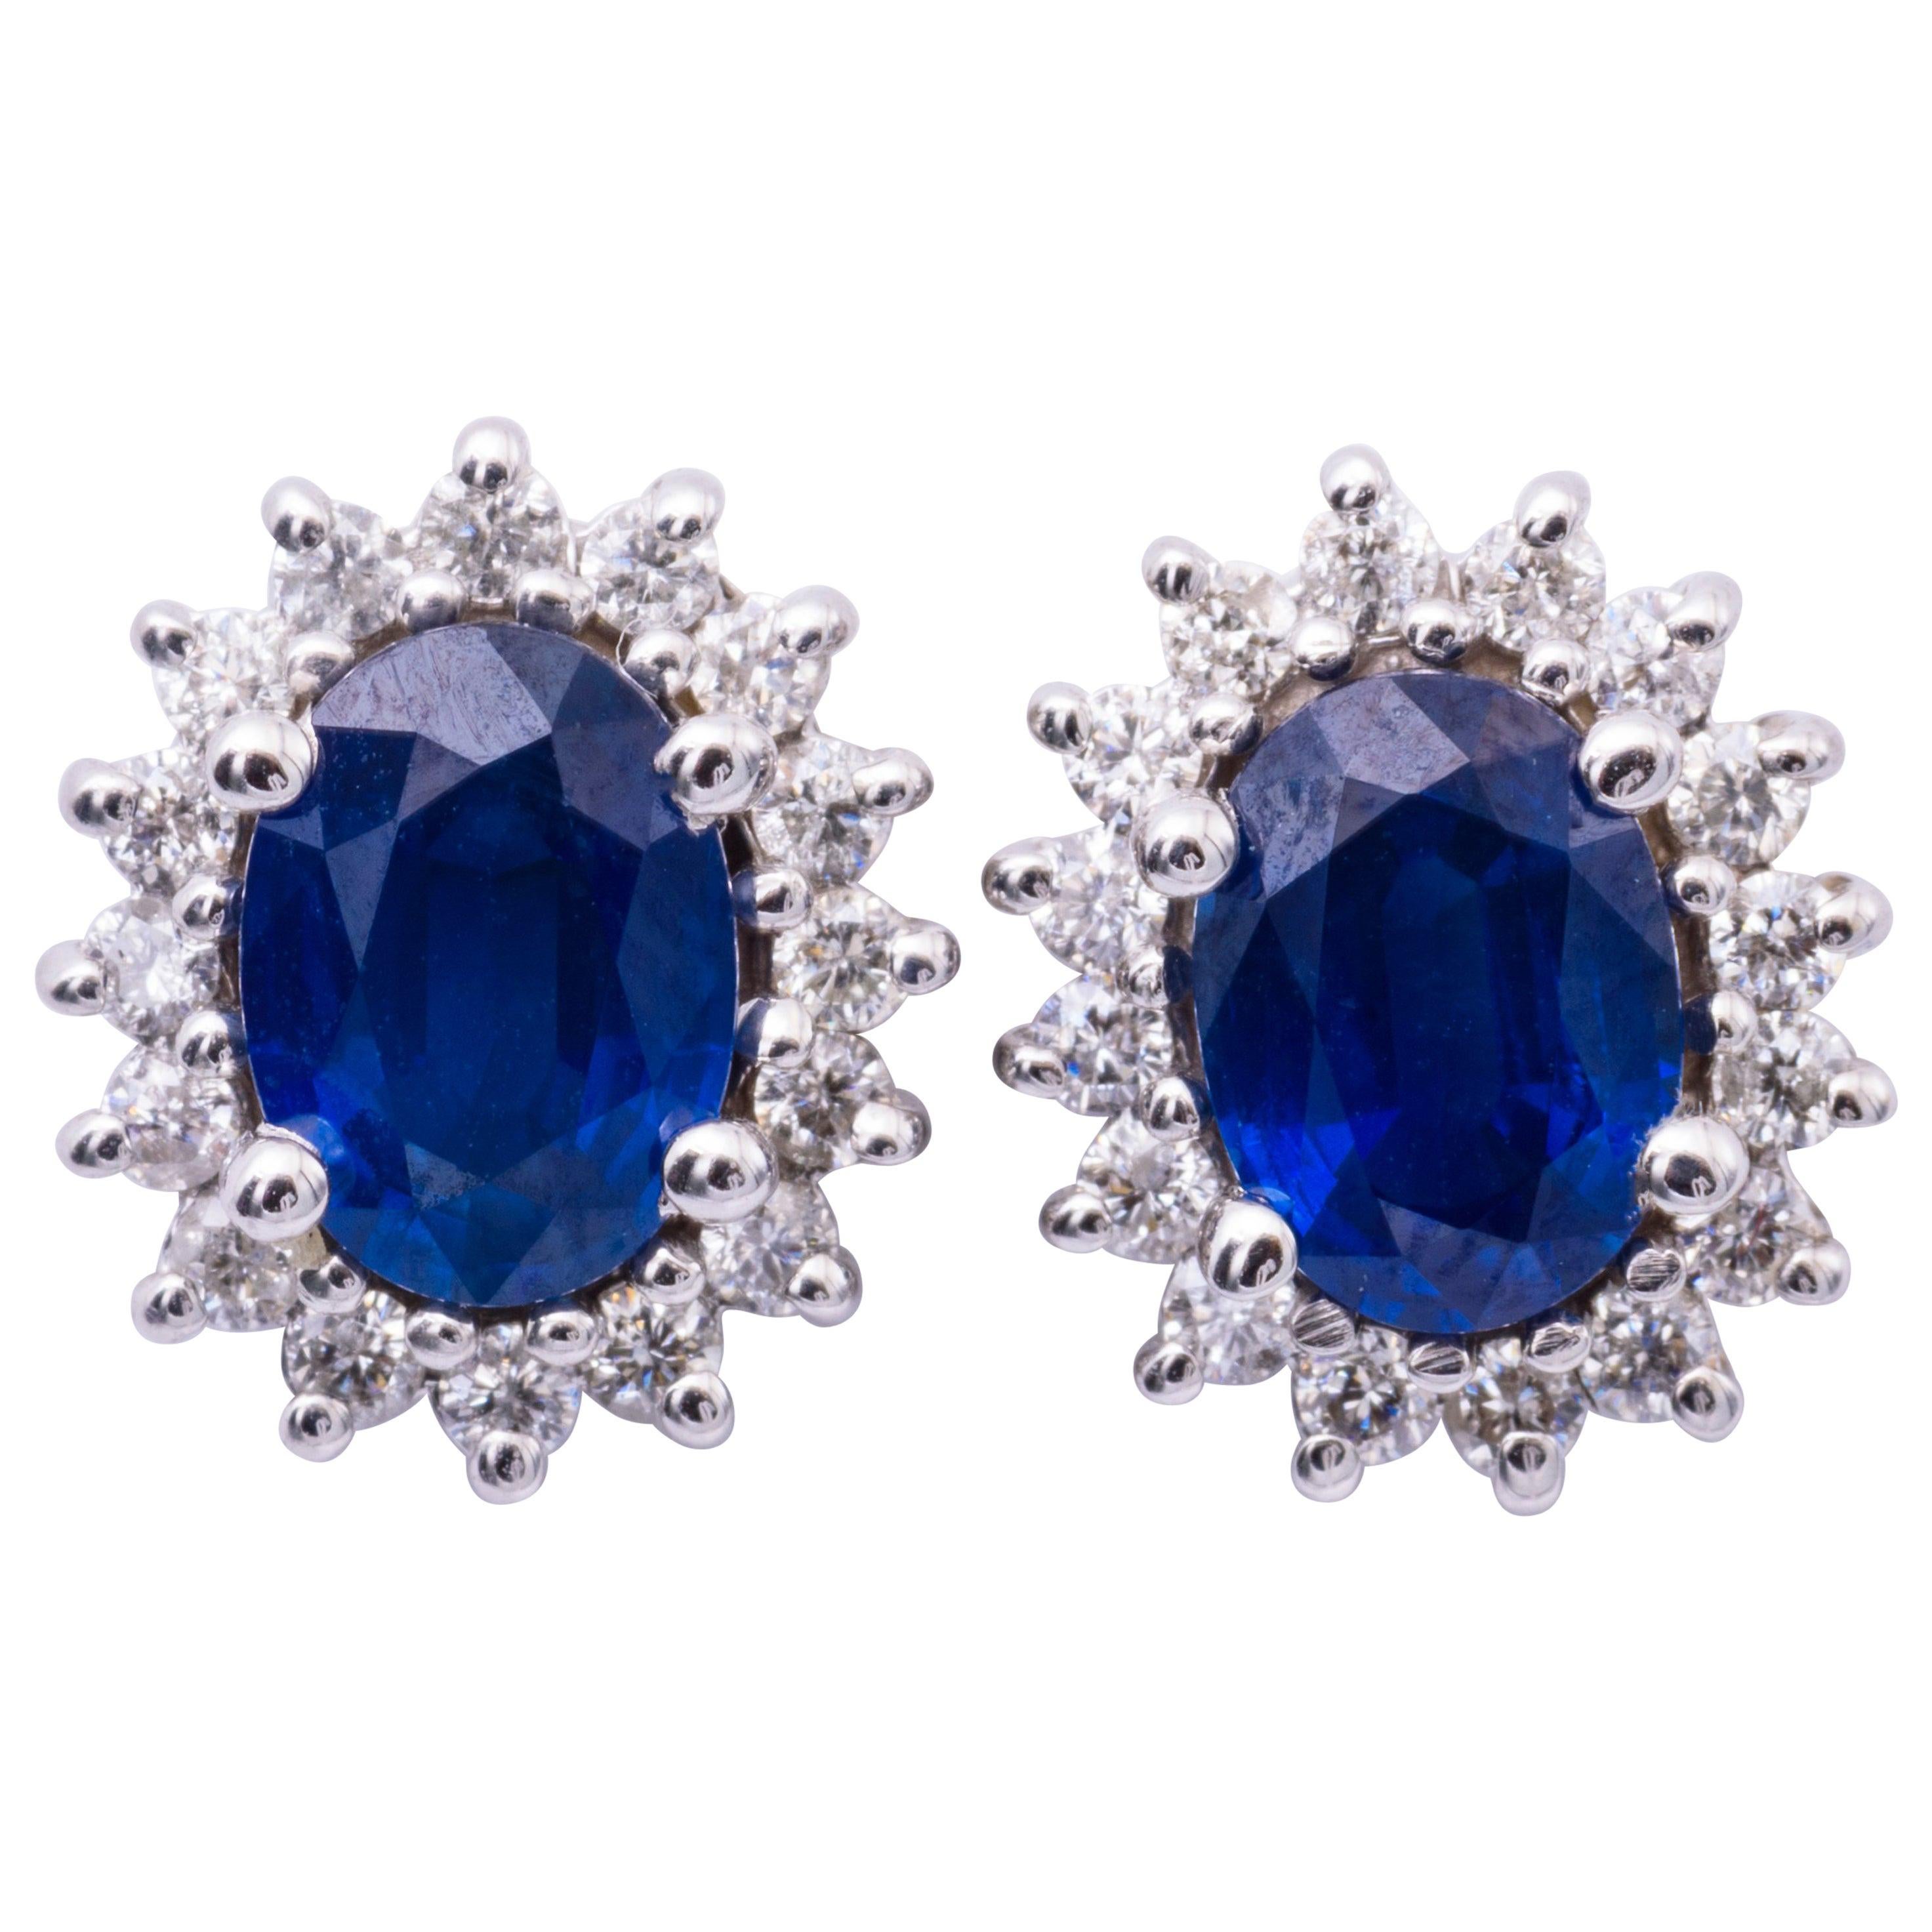 Oval Sapphire and Diamond Studs Earrings